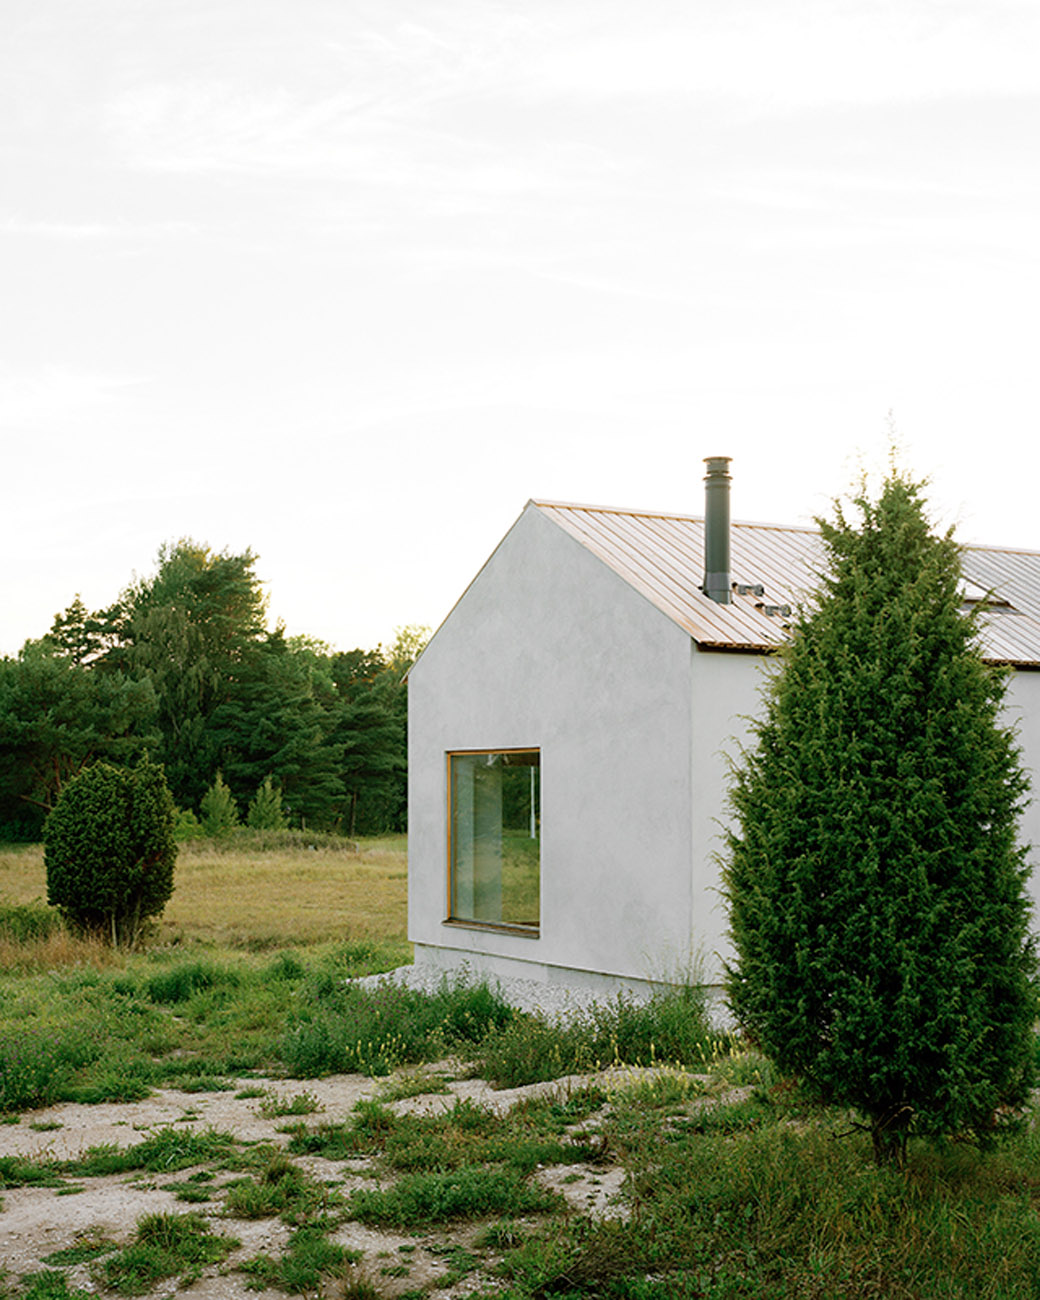 House on Gotland by Etat Arkitekter